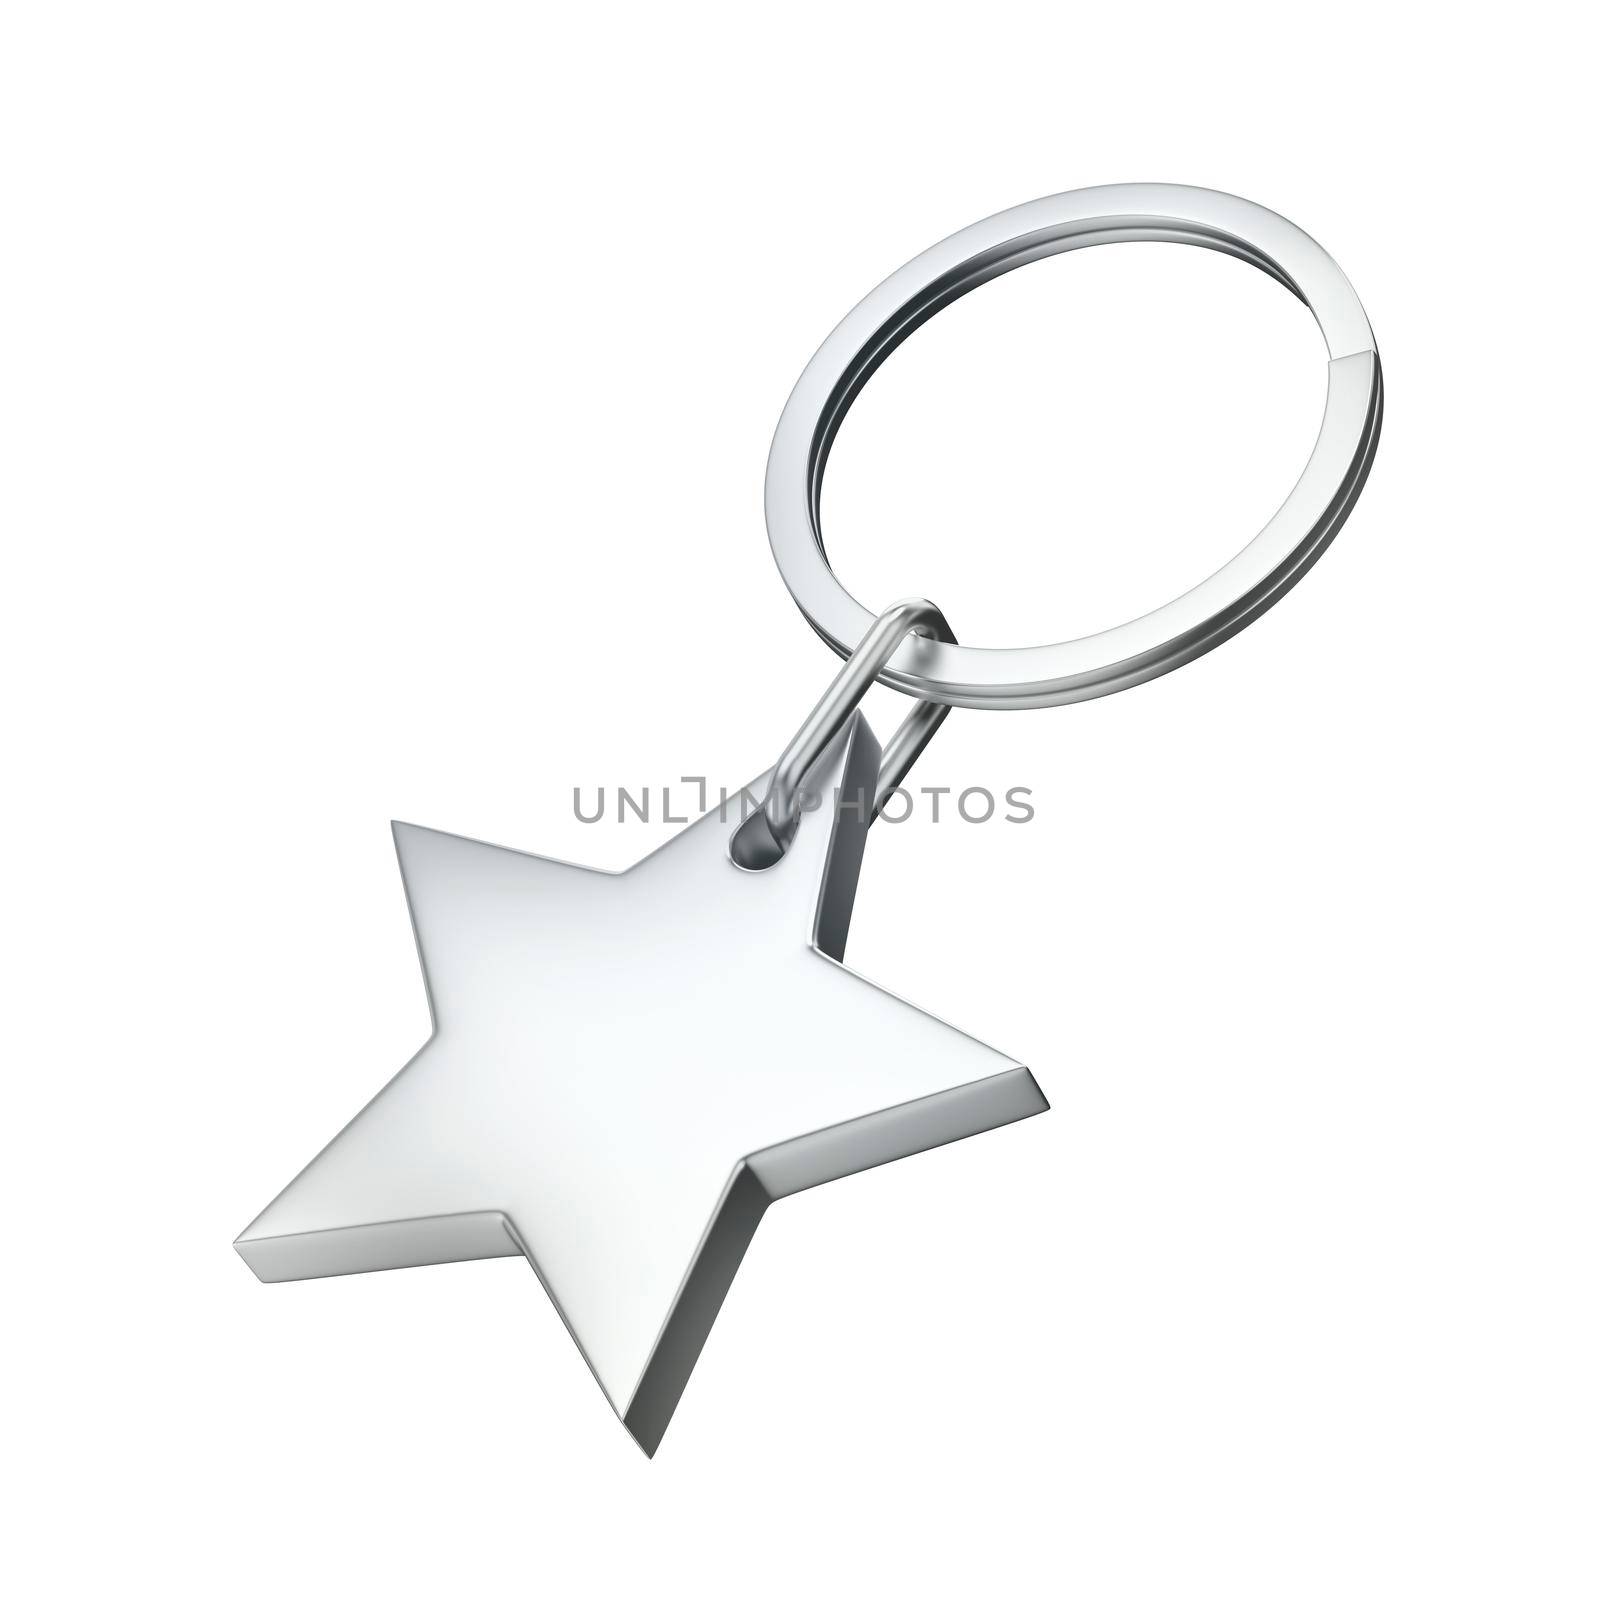 Star shape keychain isolated on white background